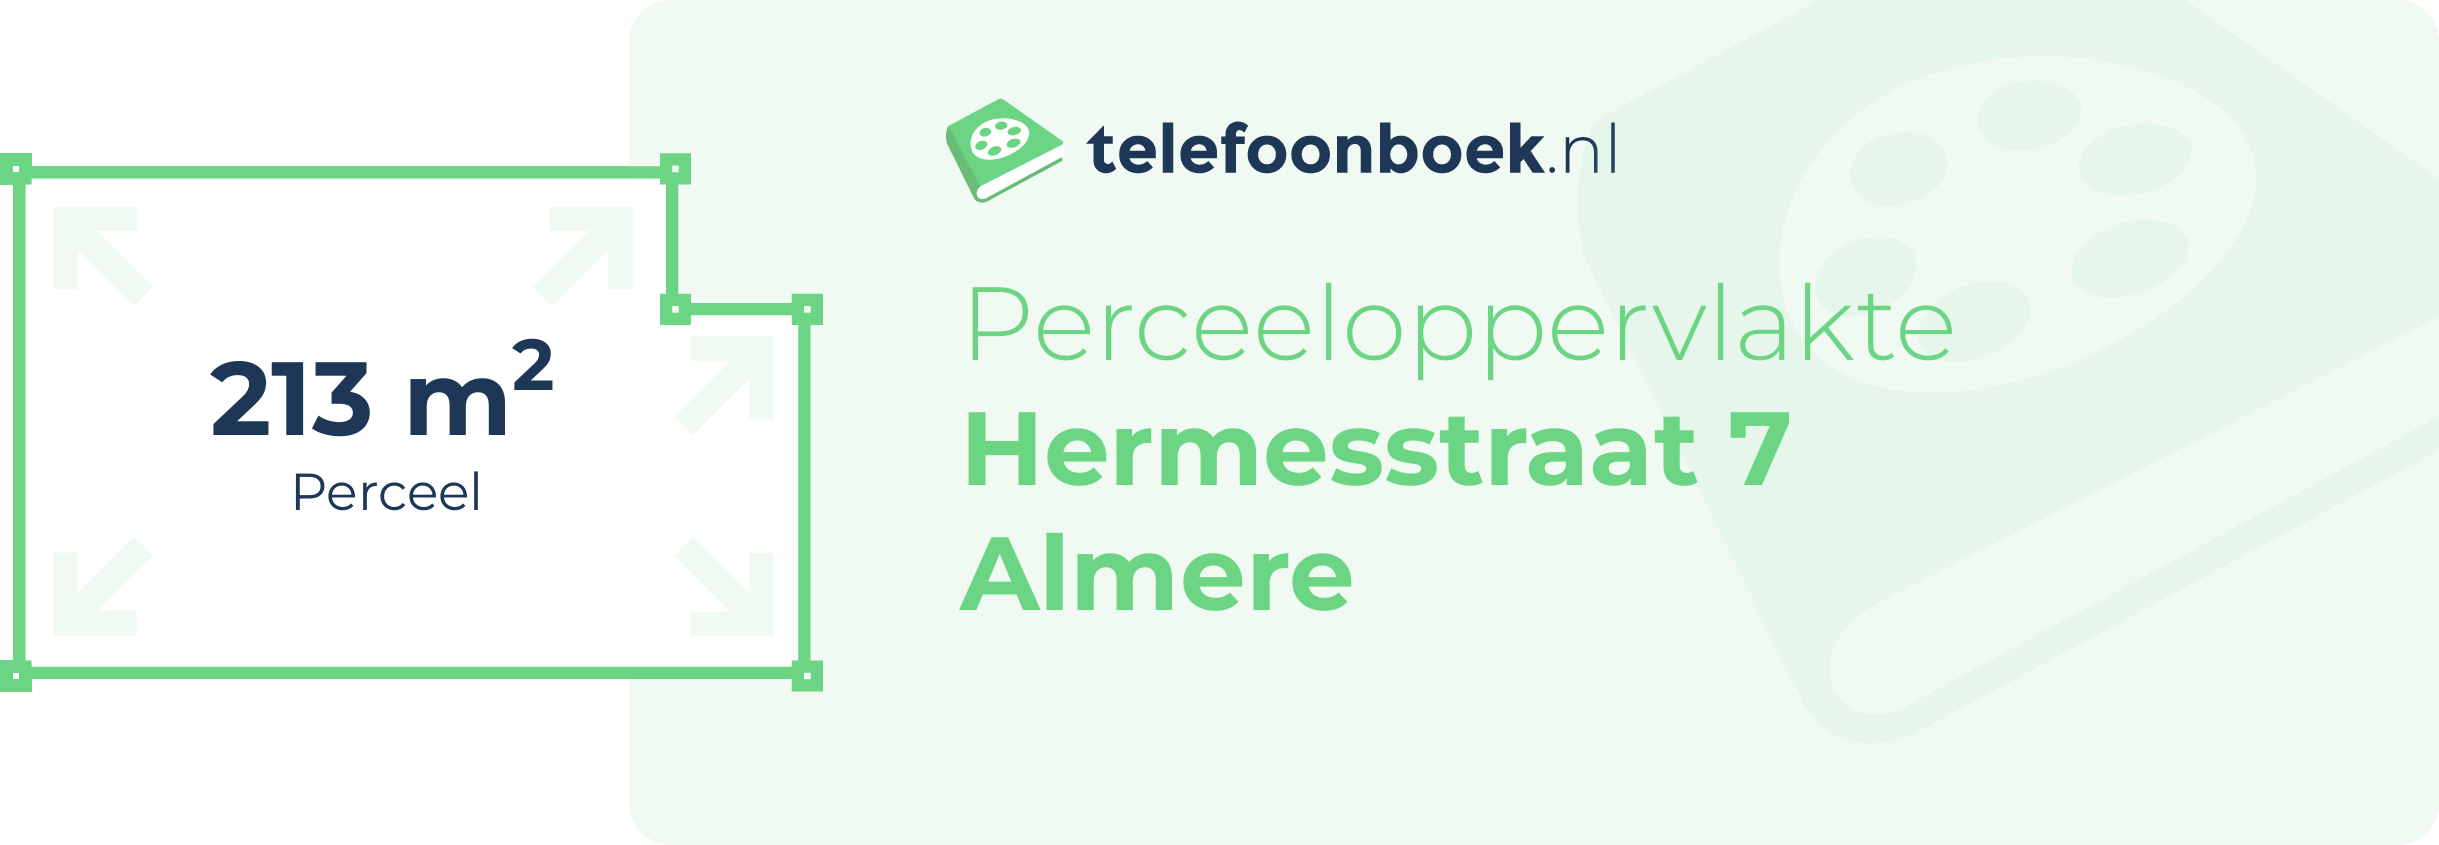 Perceeloppervlakte Hermesstraat 7 Almere